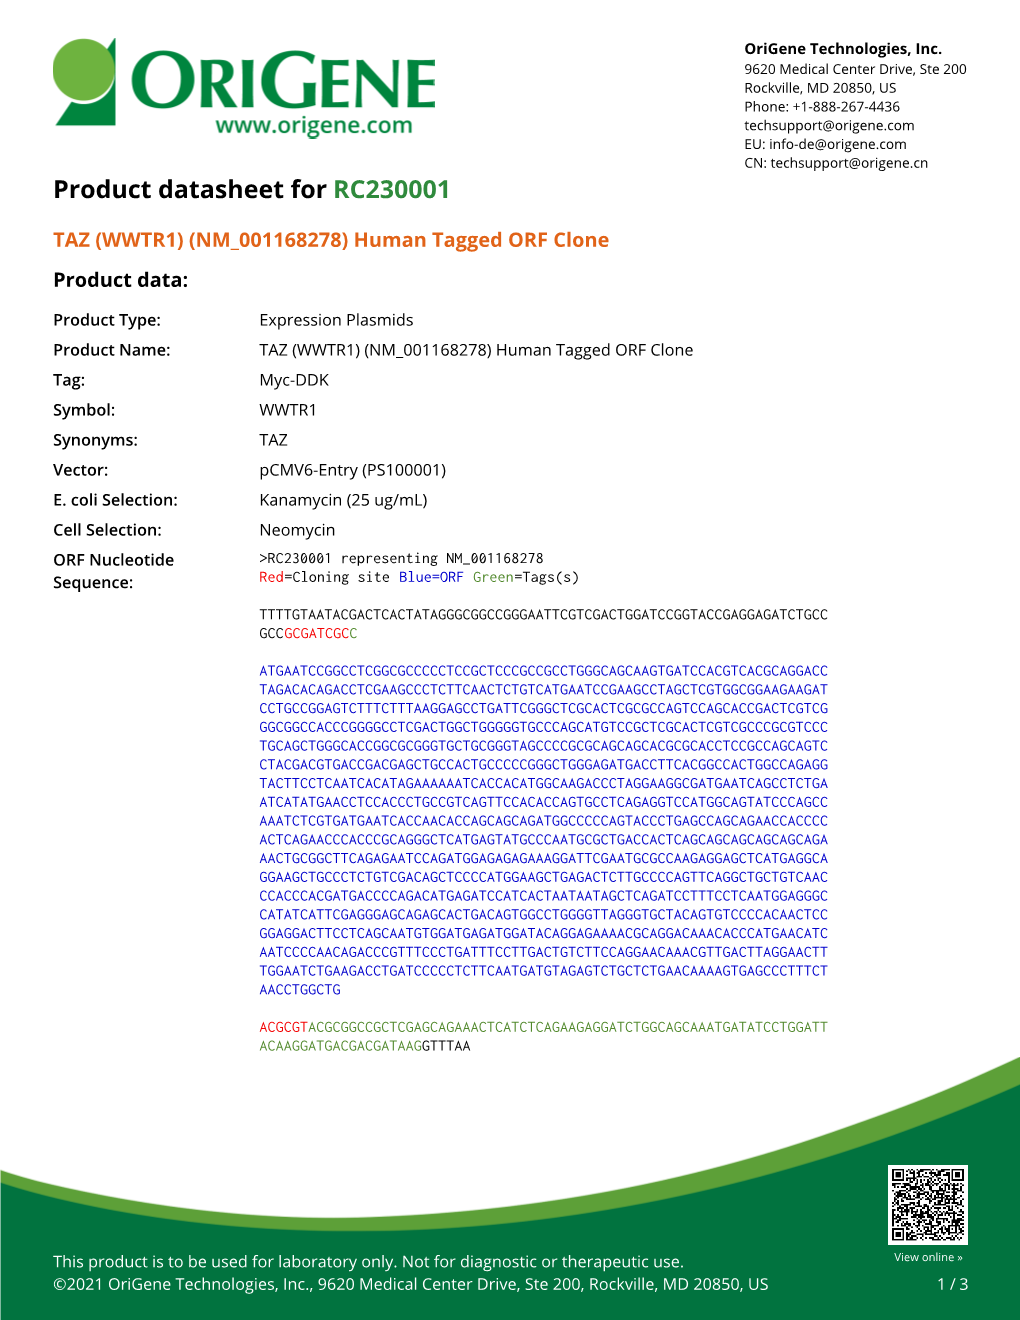 TAZ (WWTR1) (NM 001168278) Human Tagged ORF Clone Product Data